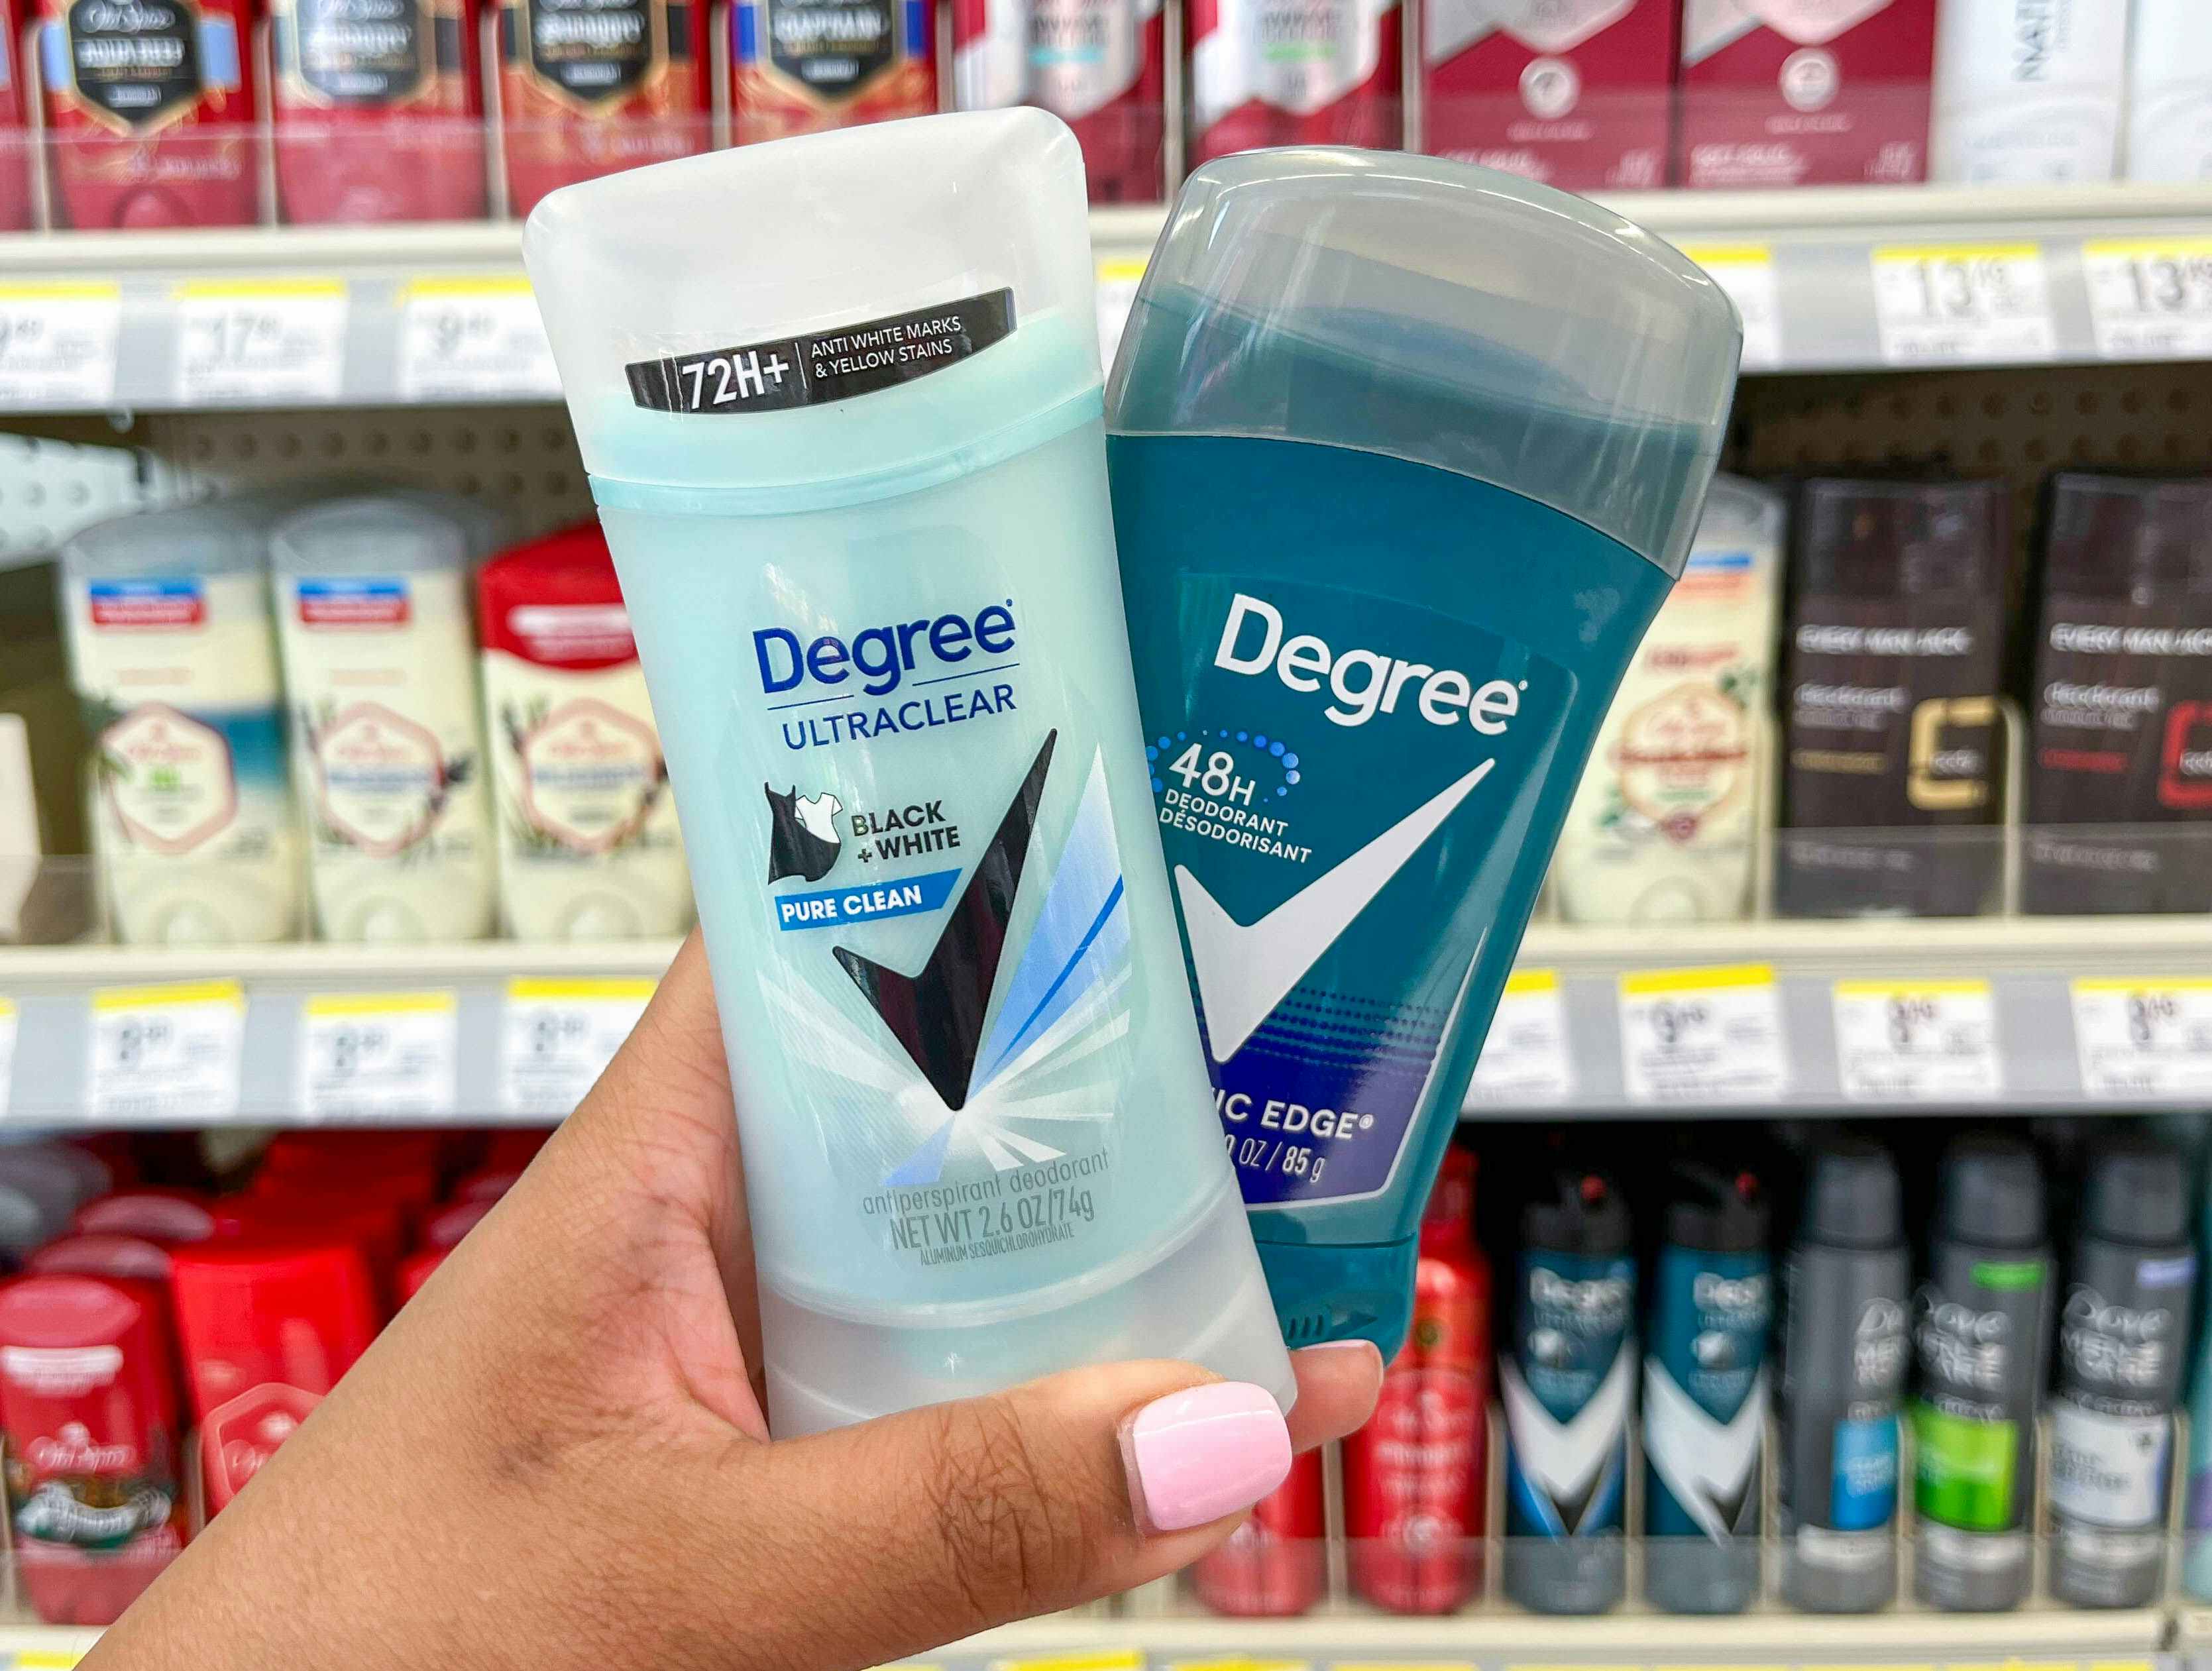 walgreens-degree-deodorant-aisle-103122